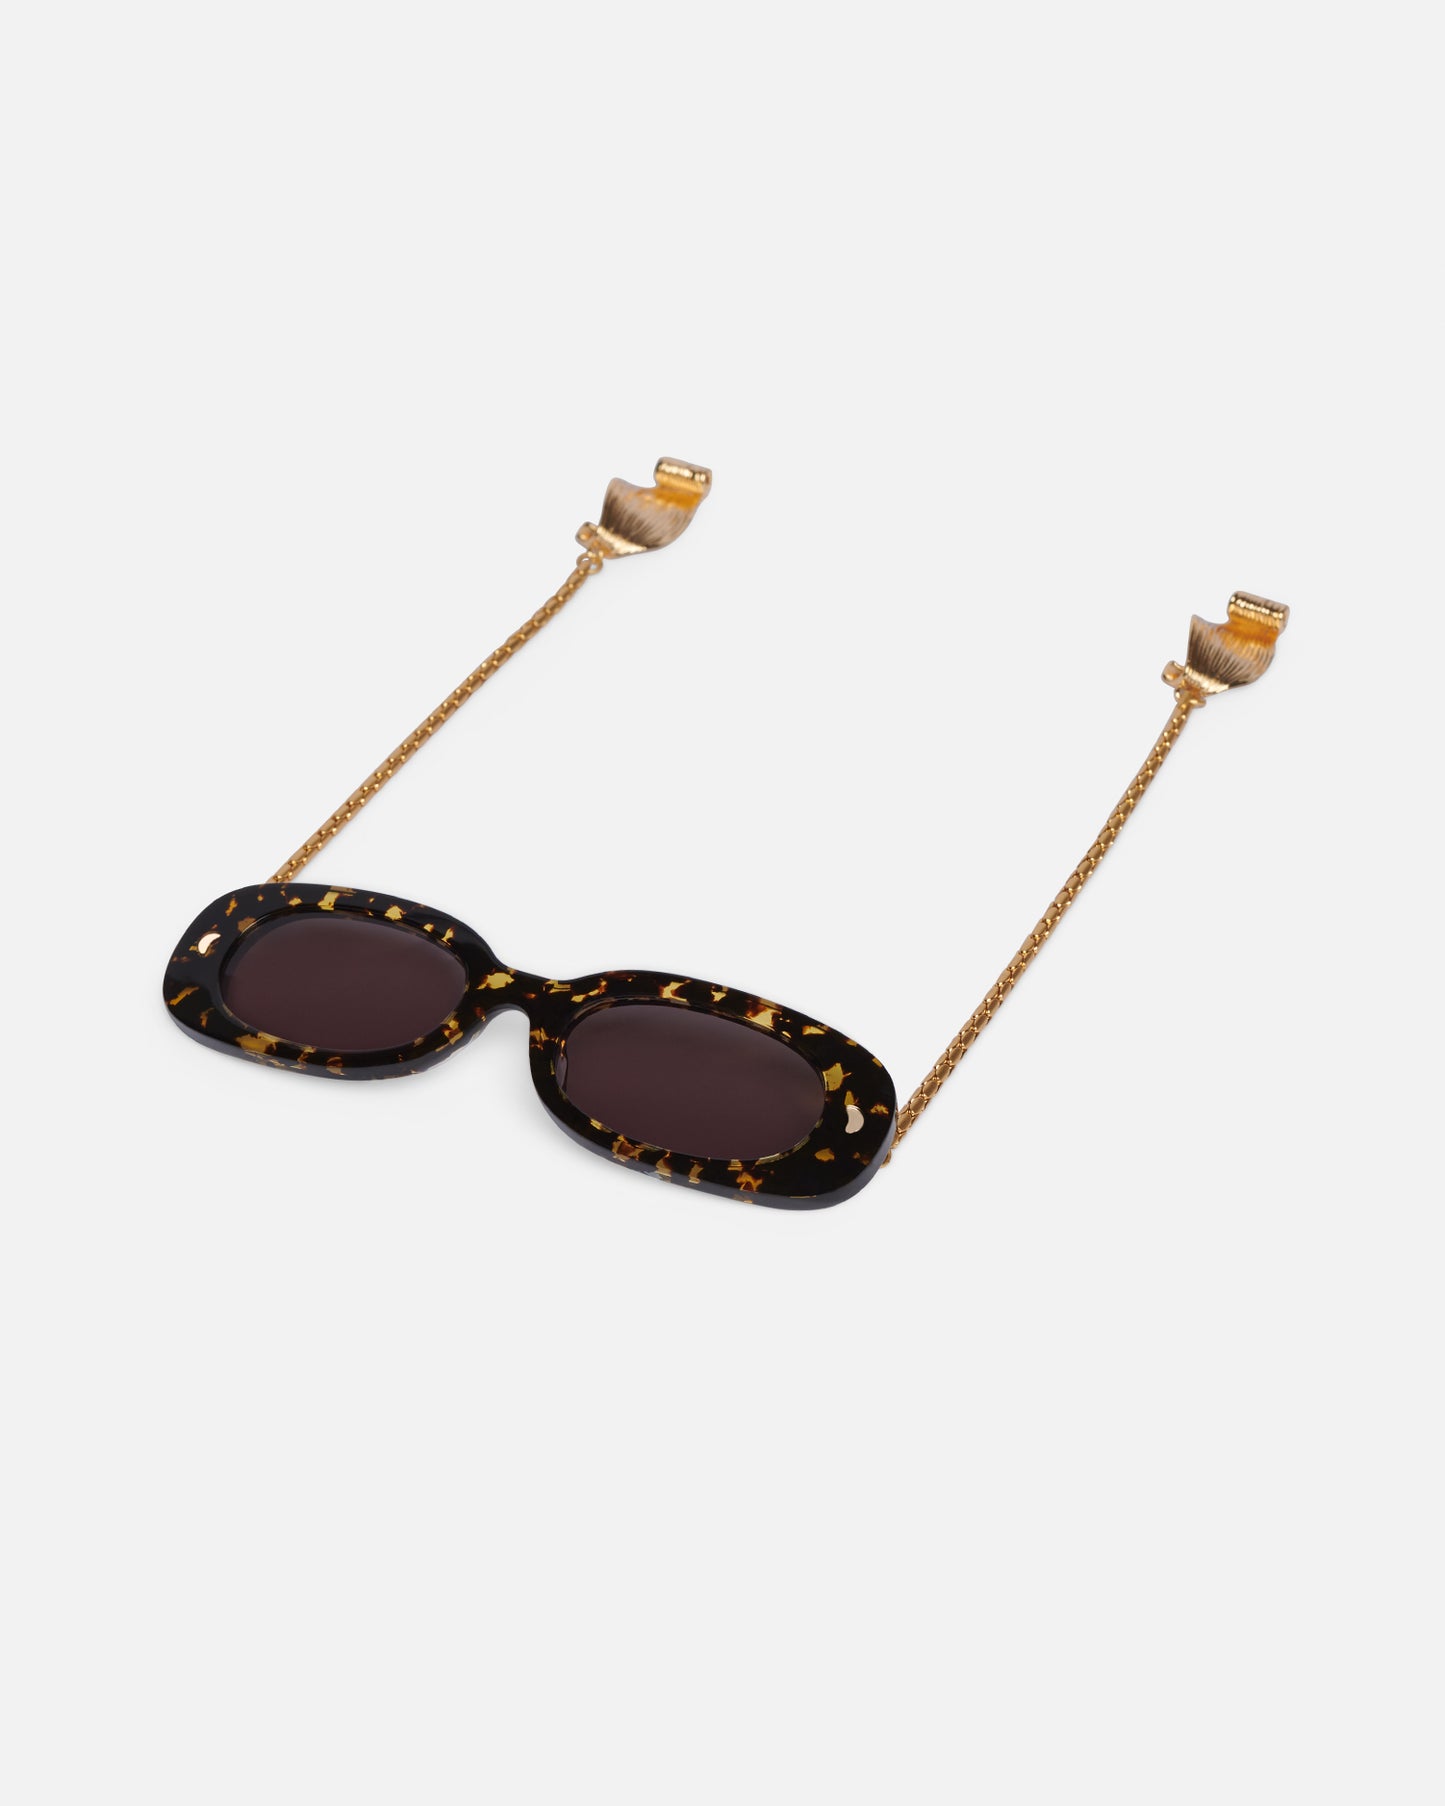 Aliza Charm - Bio-Plastic Oval Sunglasses - Leopard